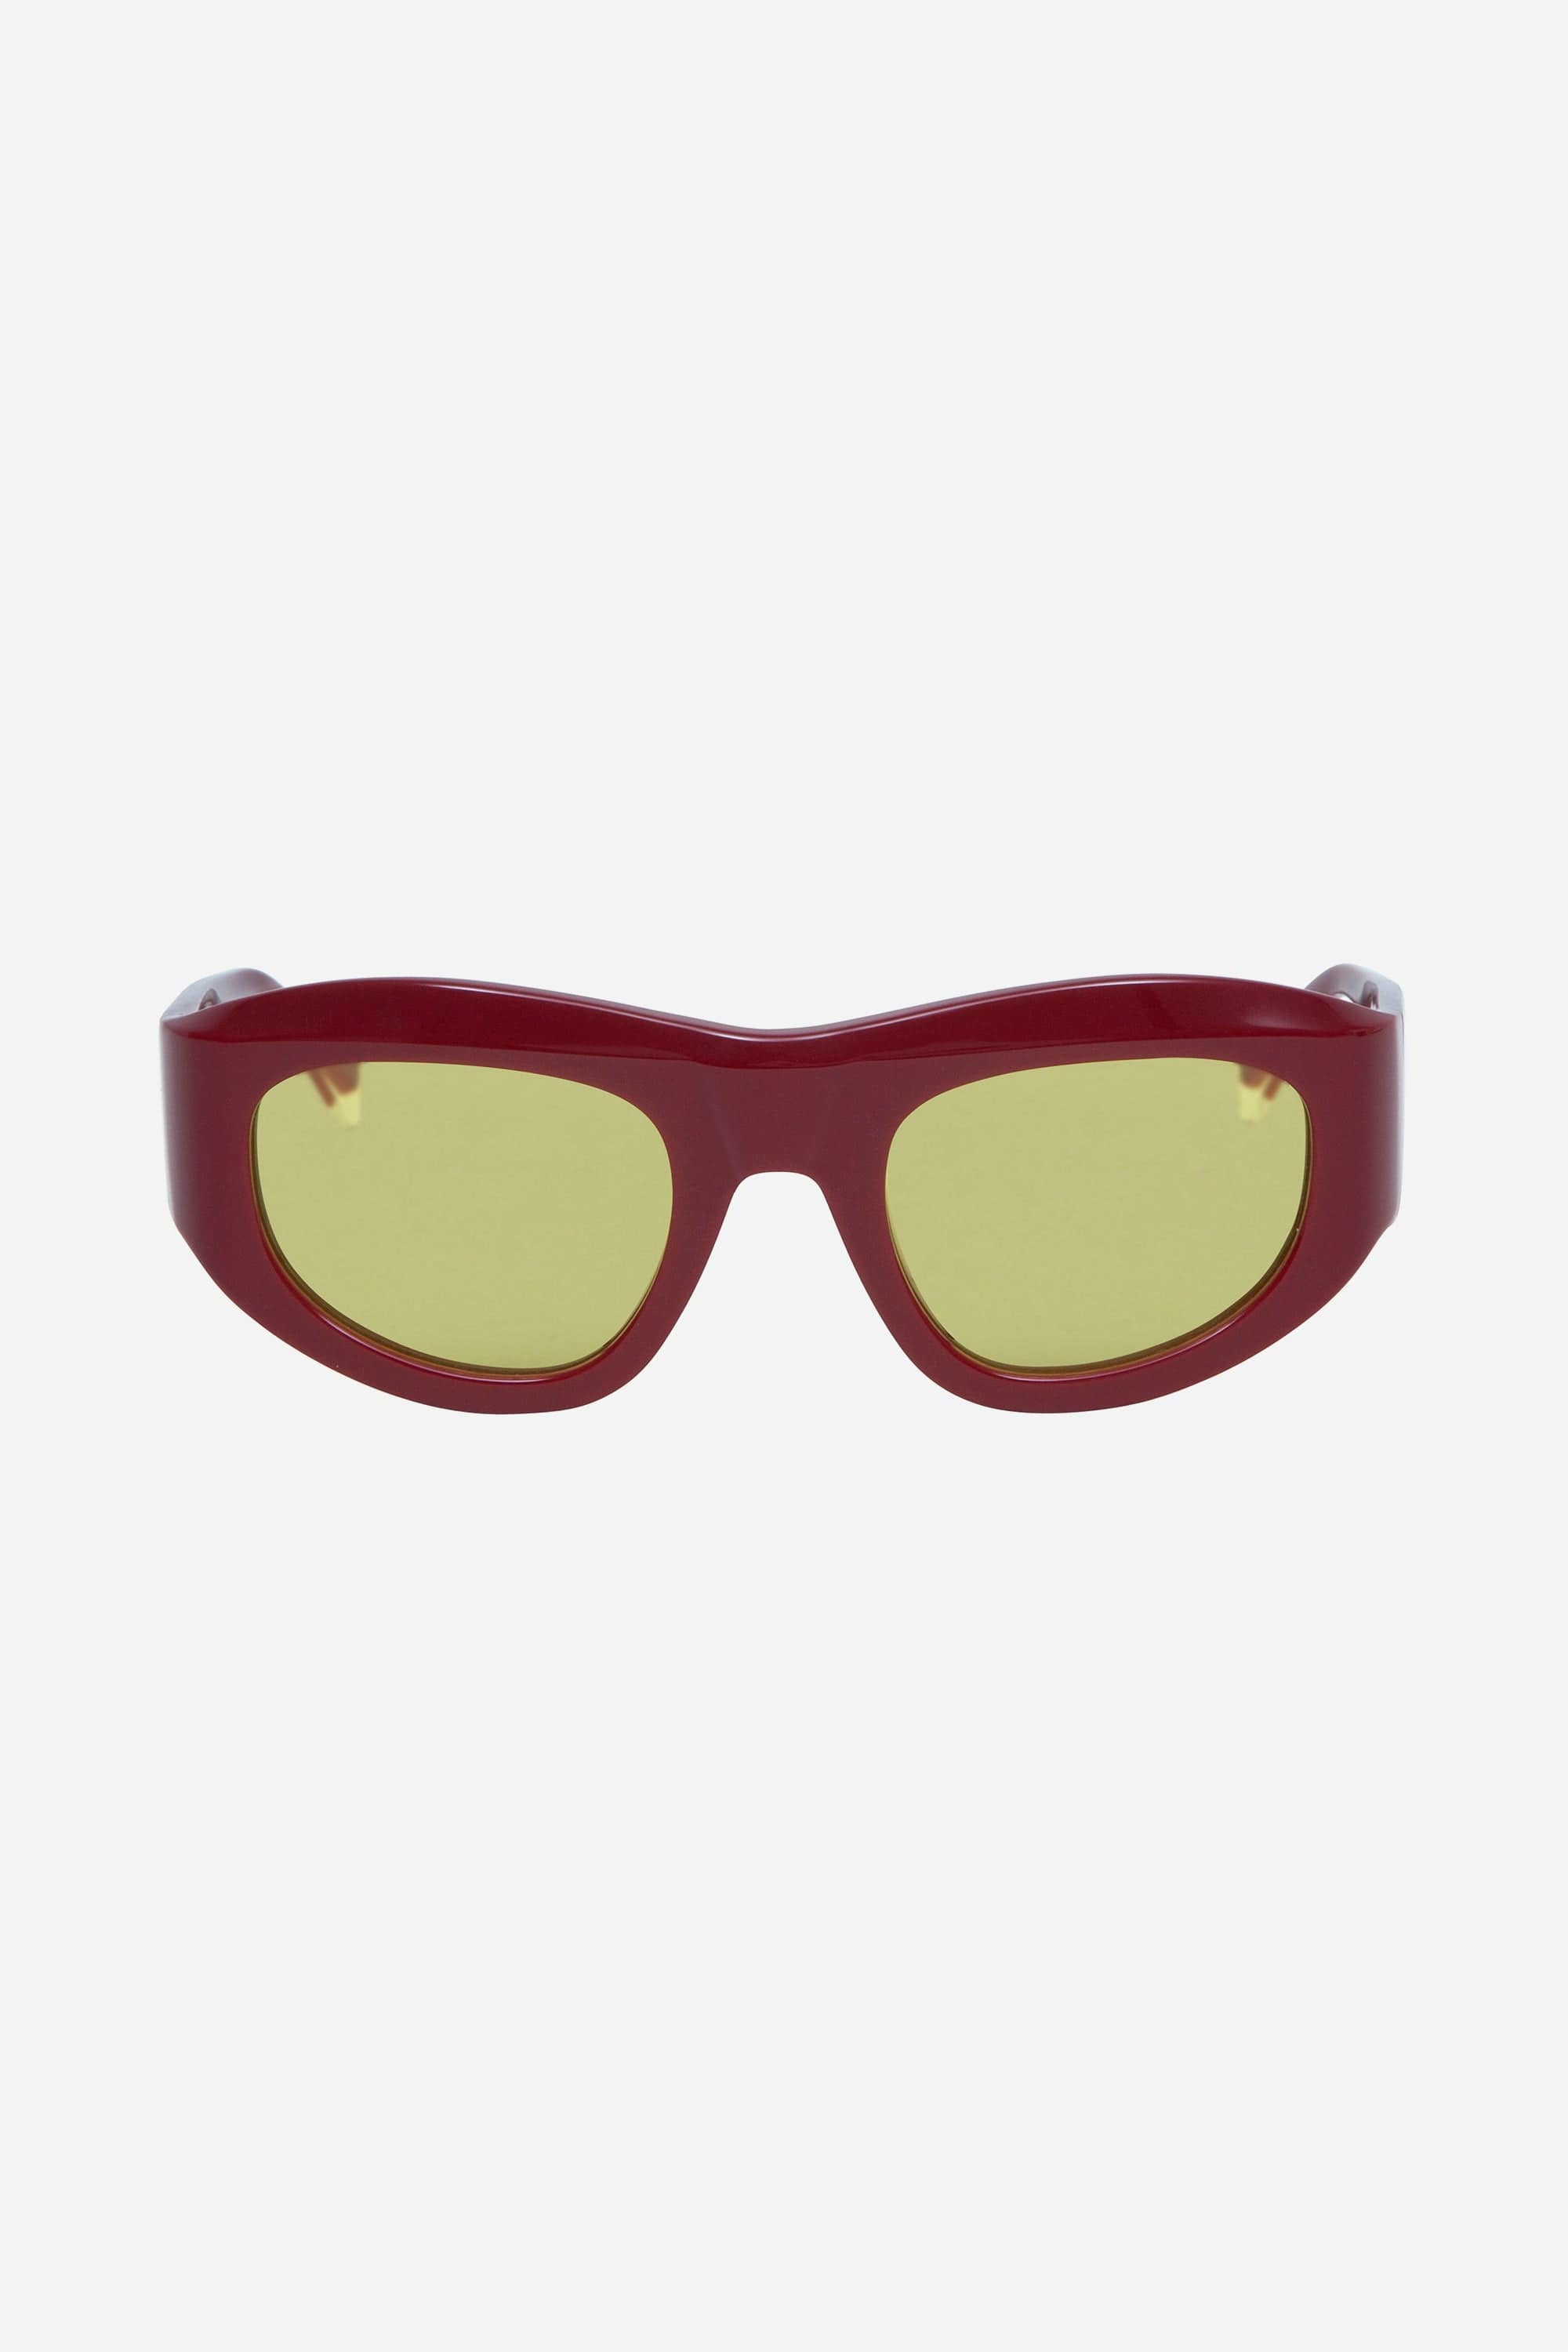 EXCLUSIVE Gigi Studios wrap around red sunglasses - Eyewear Club